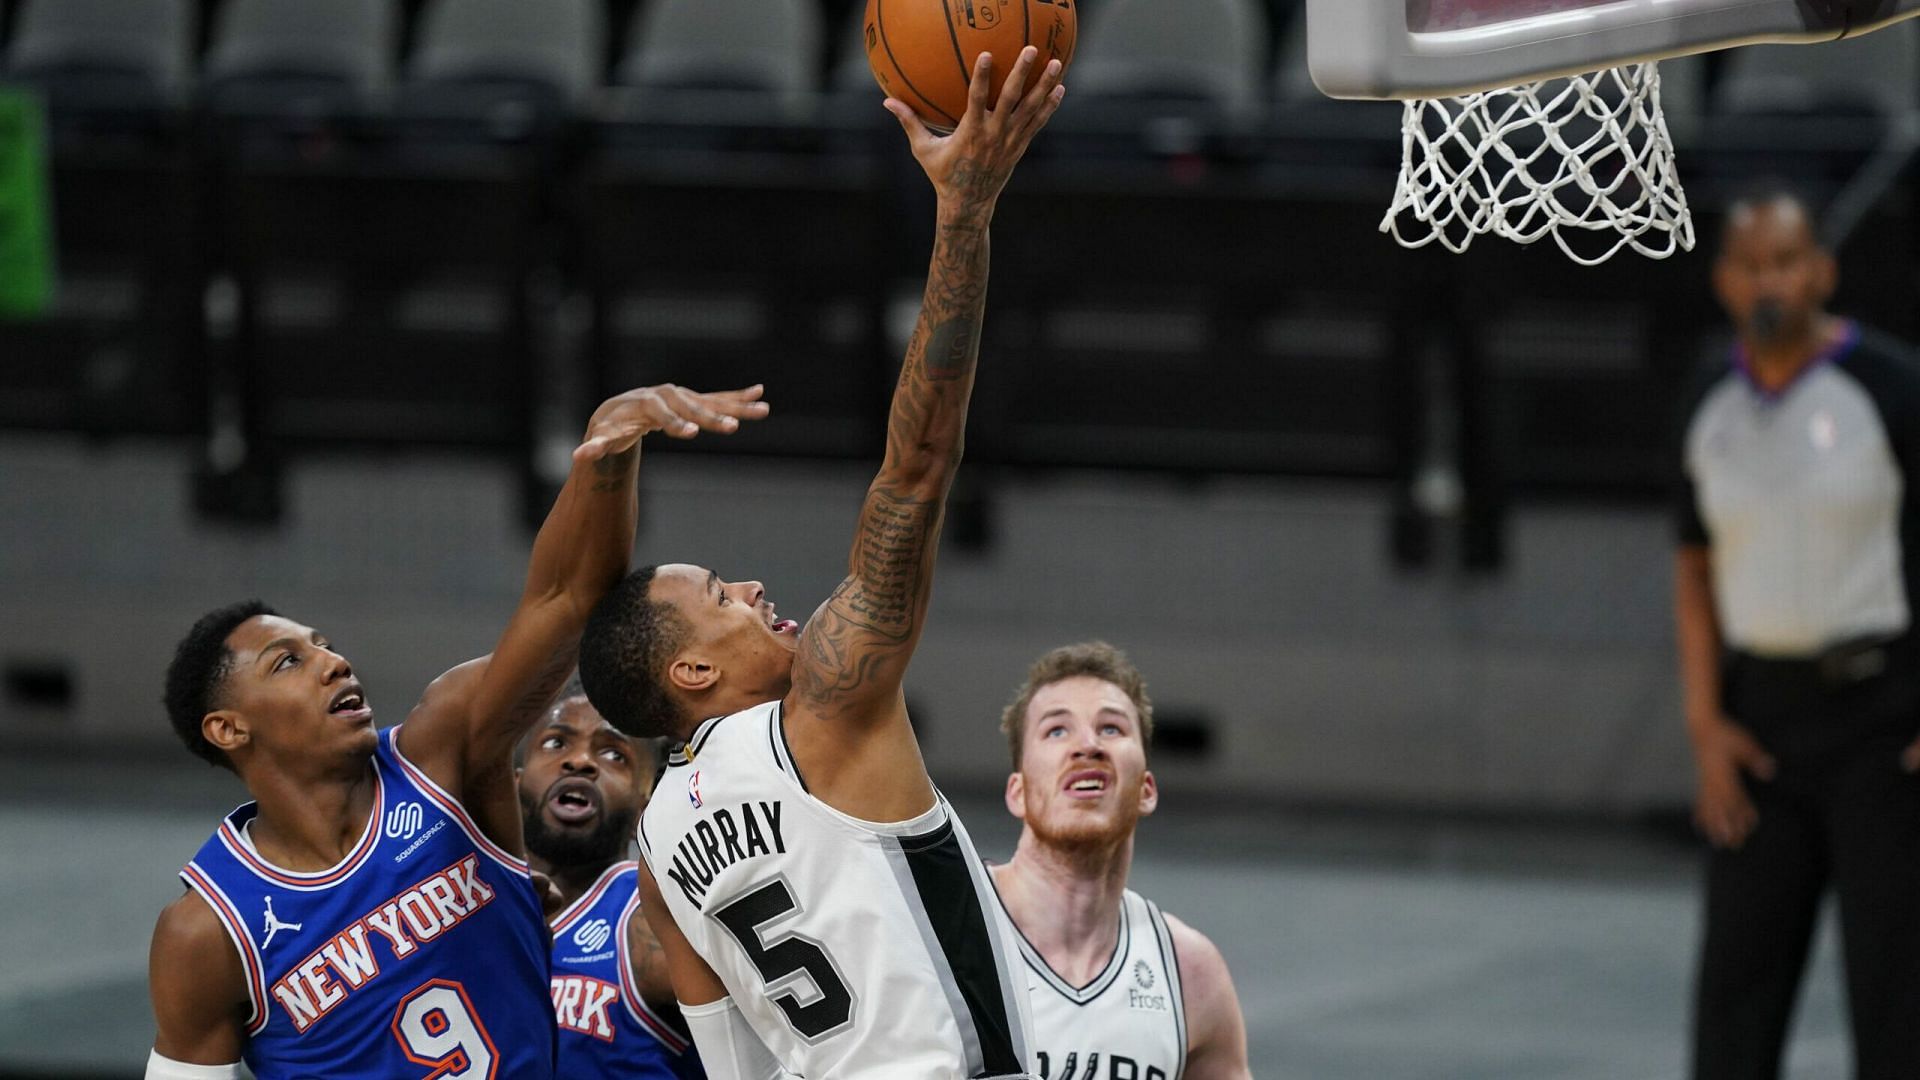 The New York Knicks will visit the San Antonio Spurs on Tuesday [Photo: NBA.com]